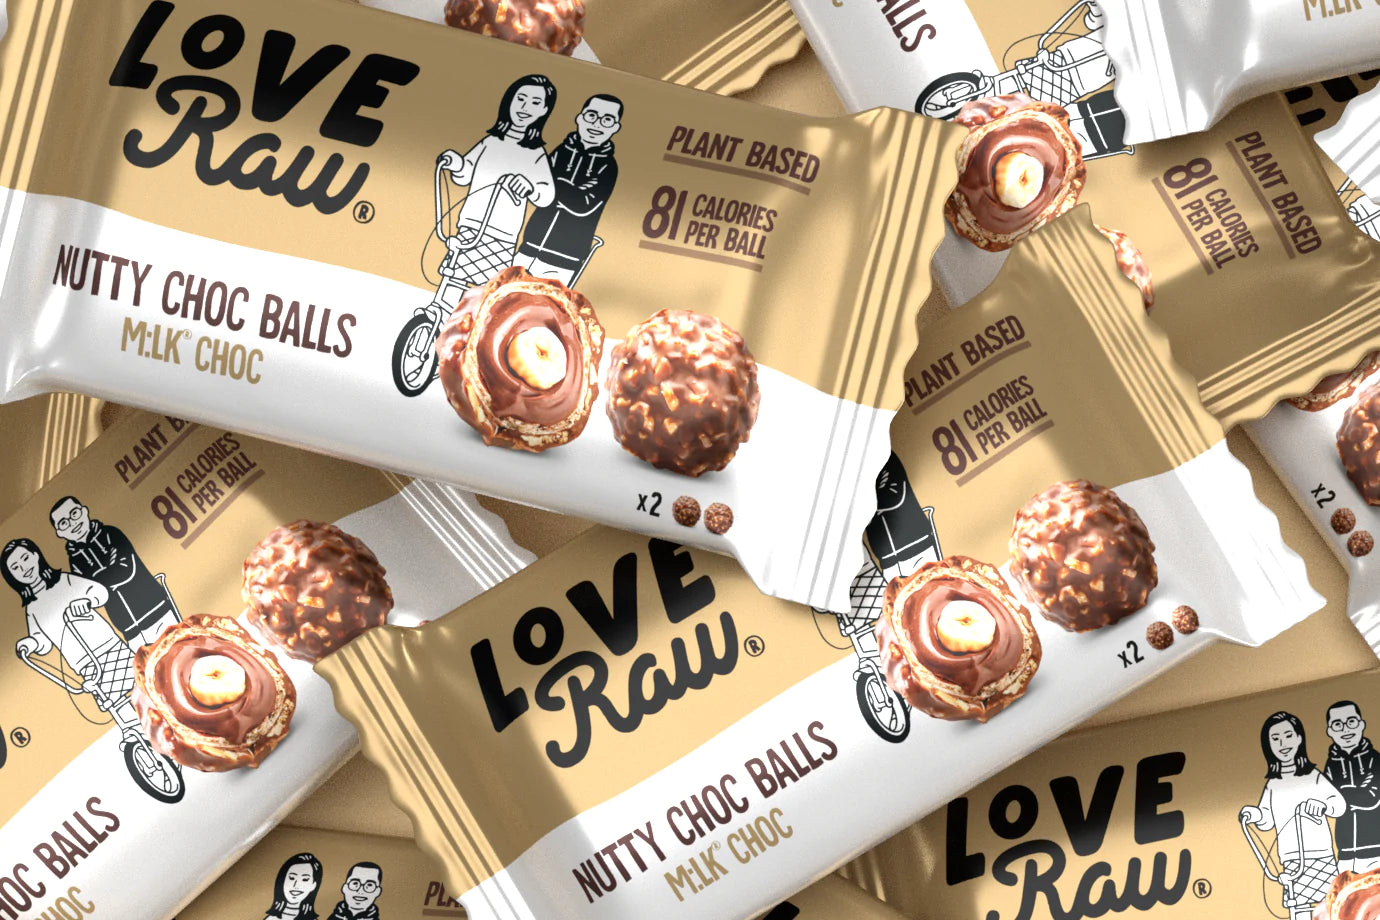 Love Raw Nutty Choc Balls - Buy 1 Get 1 Half Price!